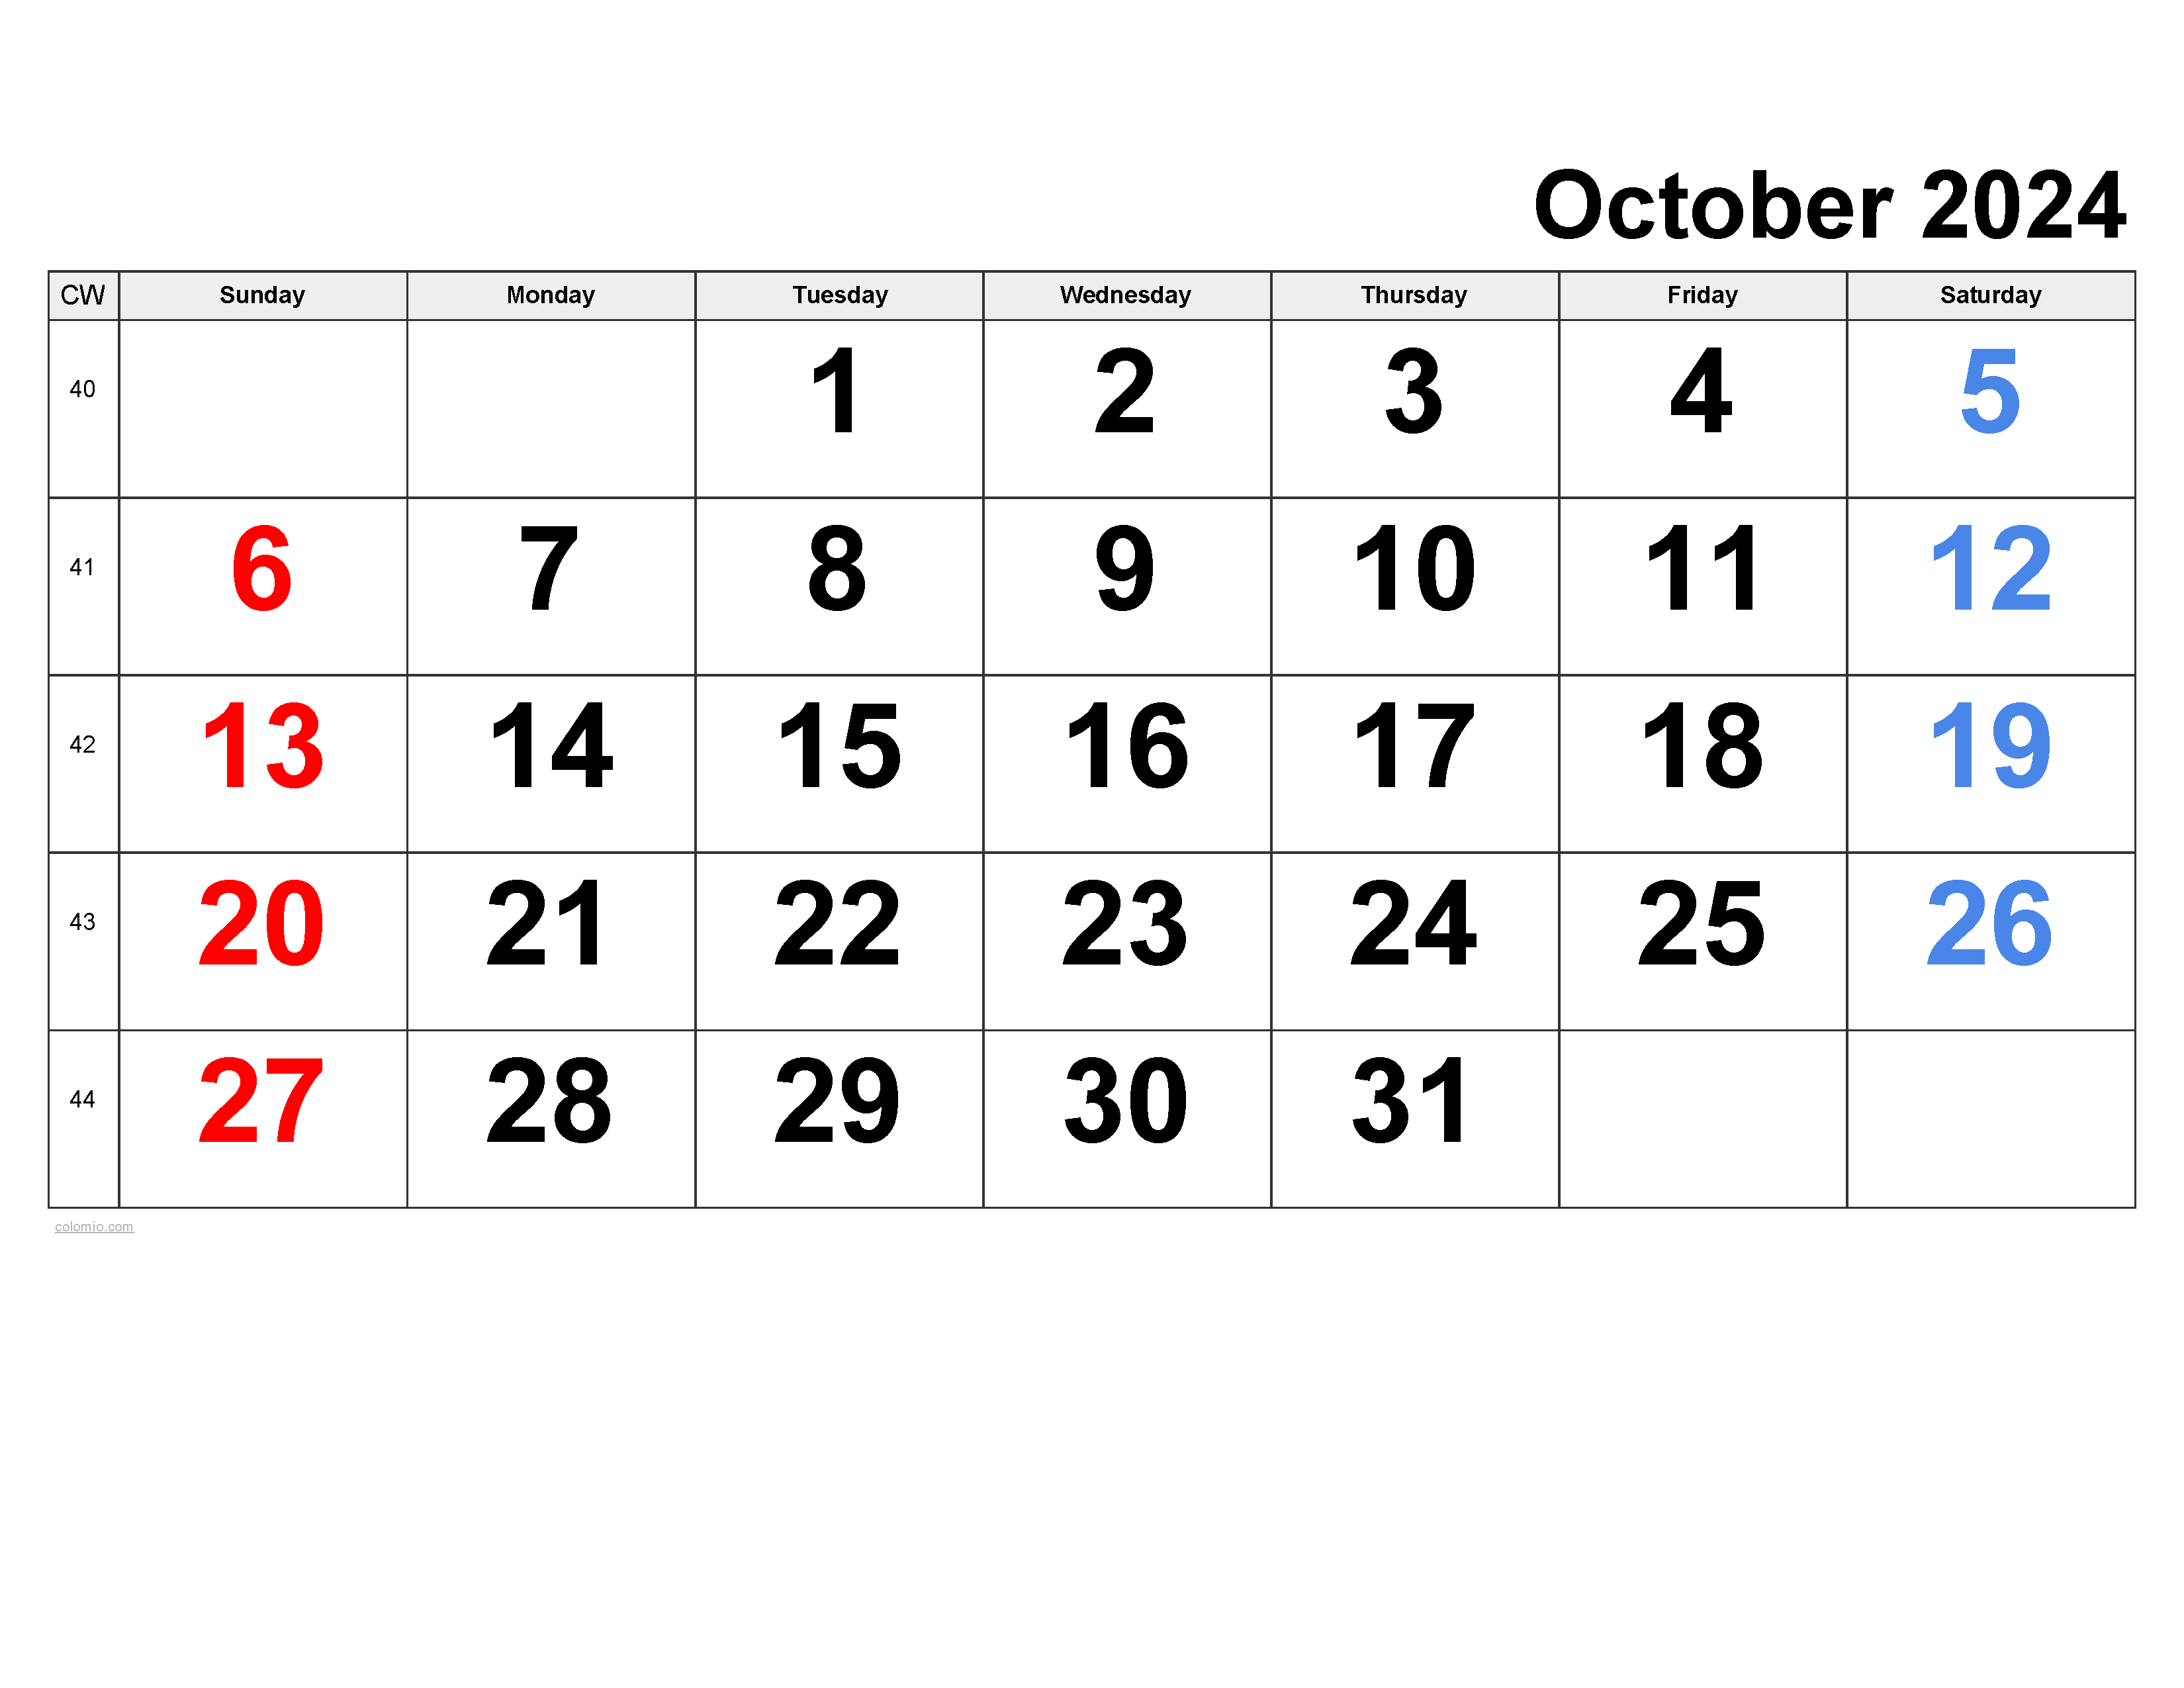 October 2024 Calendar | Free Printable Pdf, Xls And Png intended for Free Printable Calendar 2024 October And November